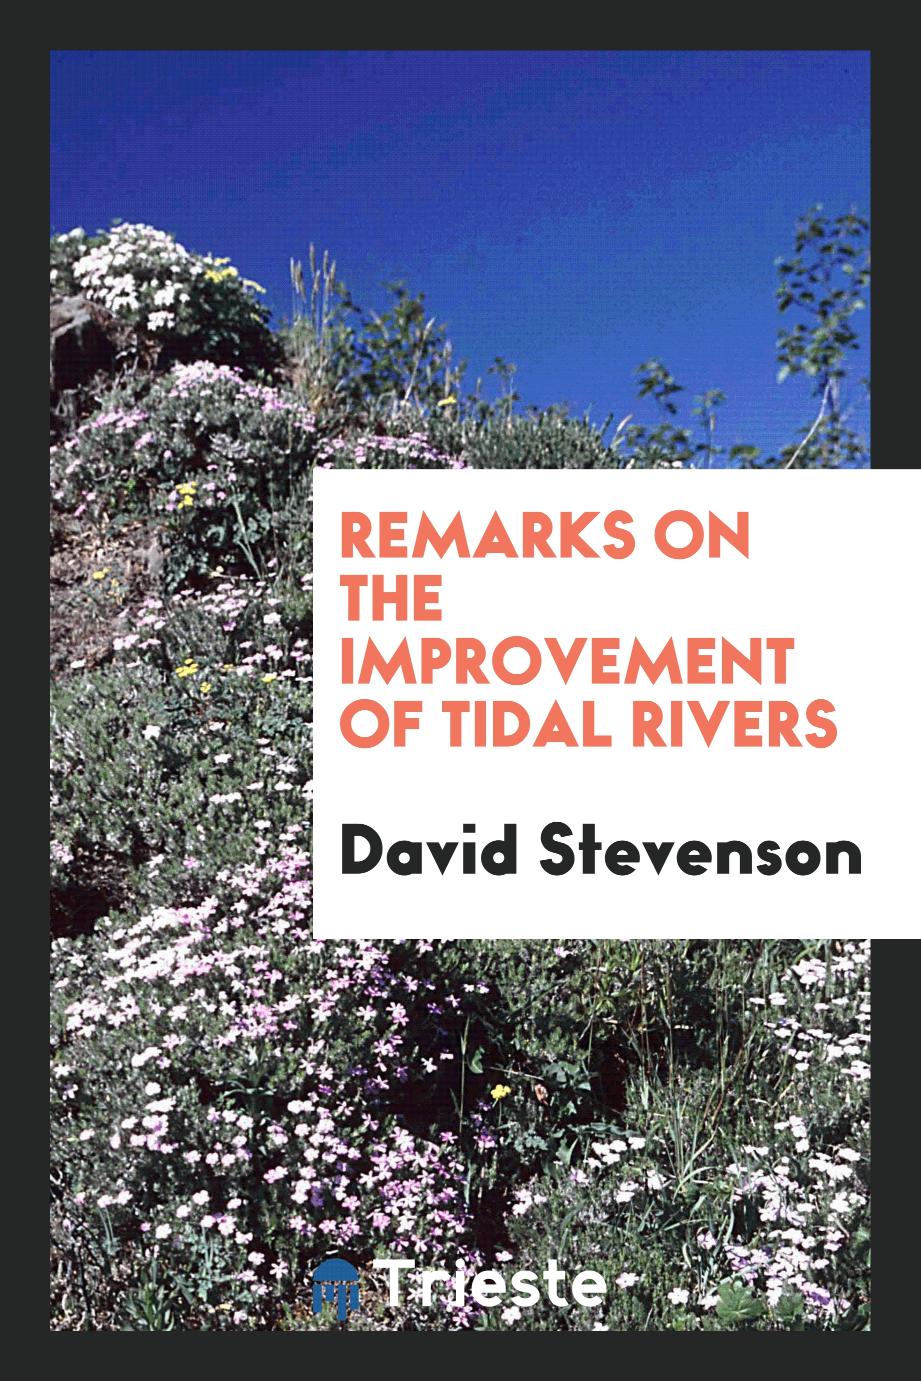 David Stevenson - Remarks on the Improvement of Tidal Rivers